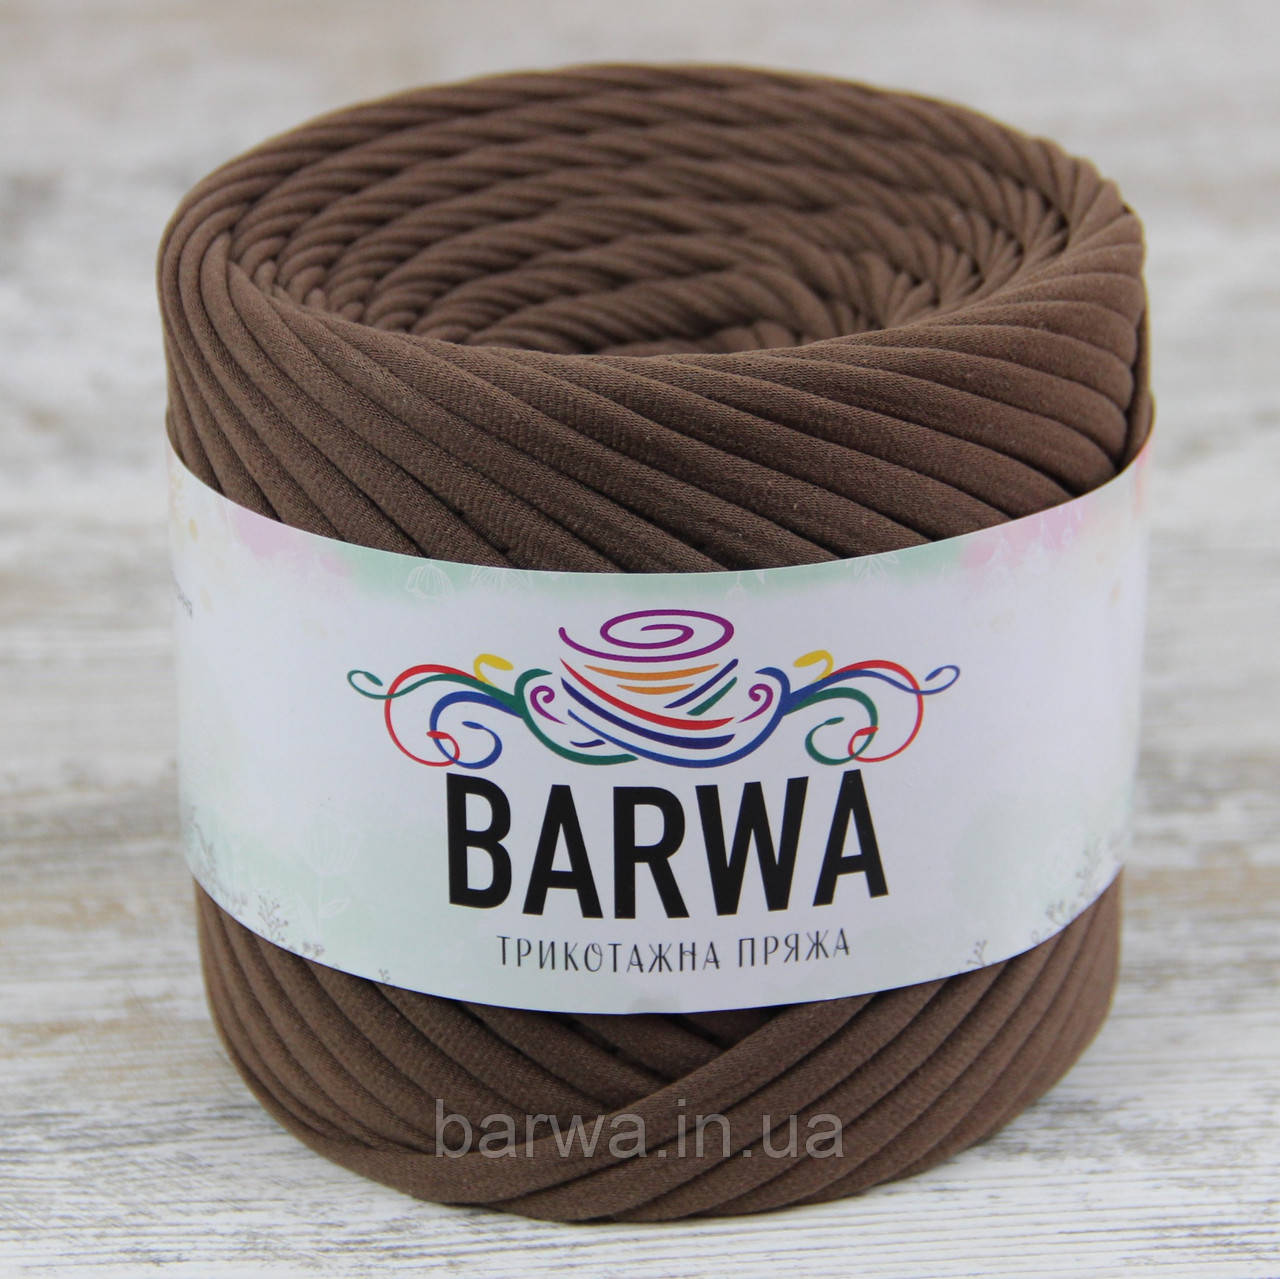 Пряжа трикотажна BARWA standart 7-9 мм, колір Арабіка